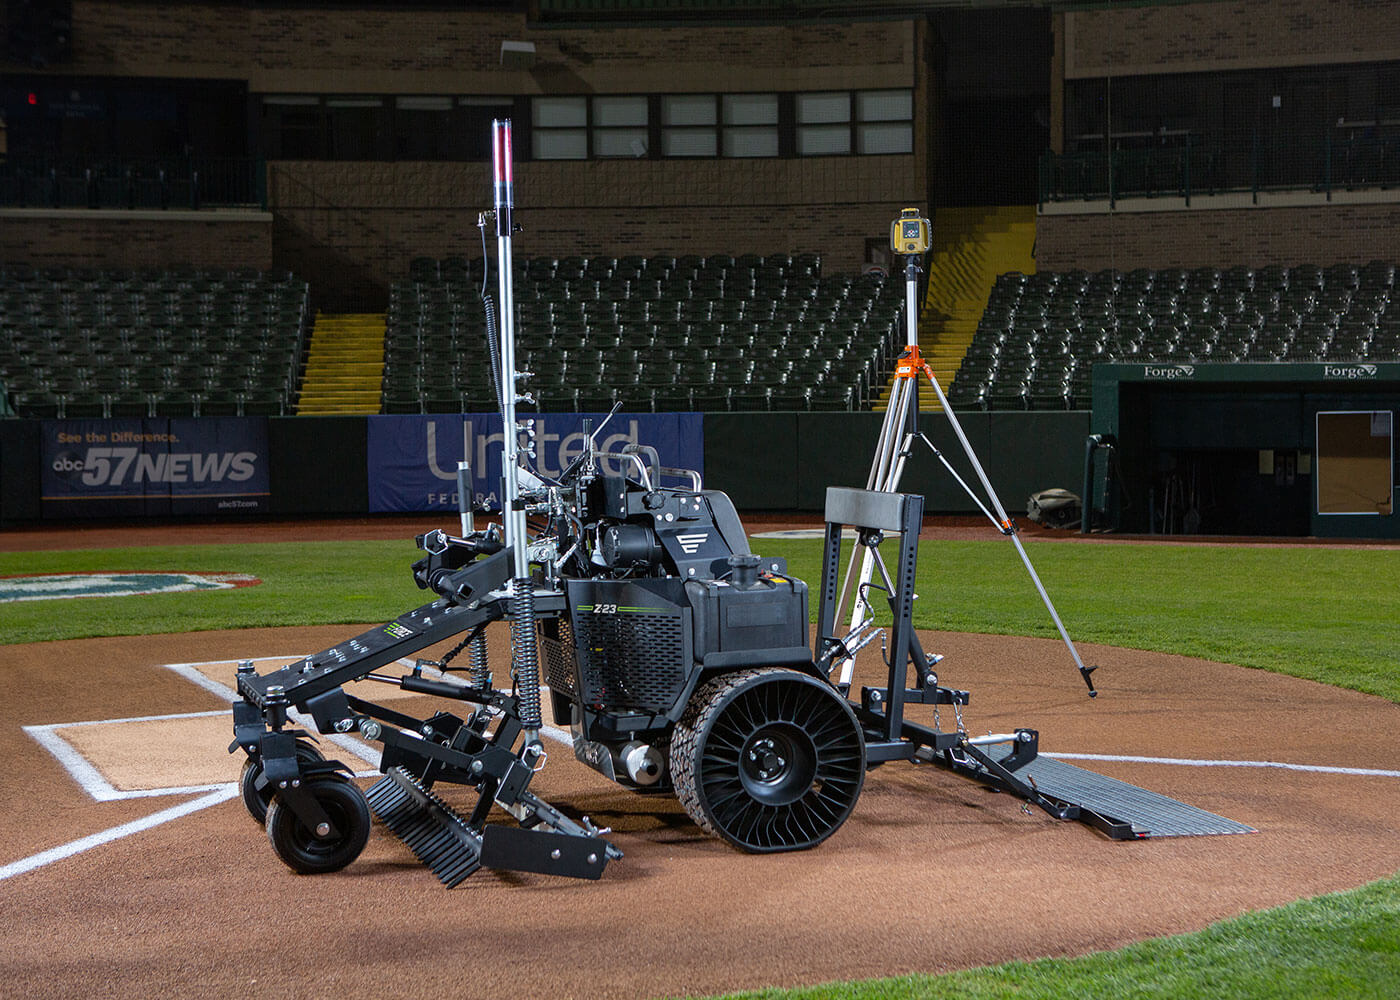 Force laser grading equipment display on ballfield 